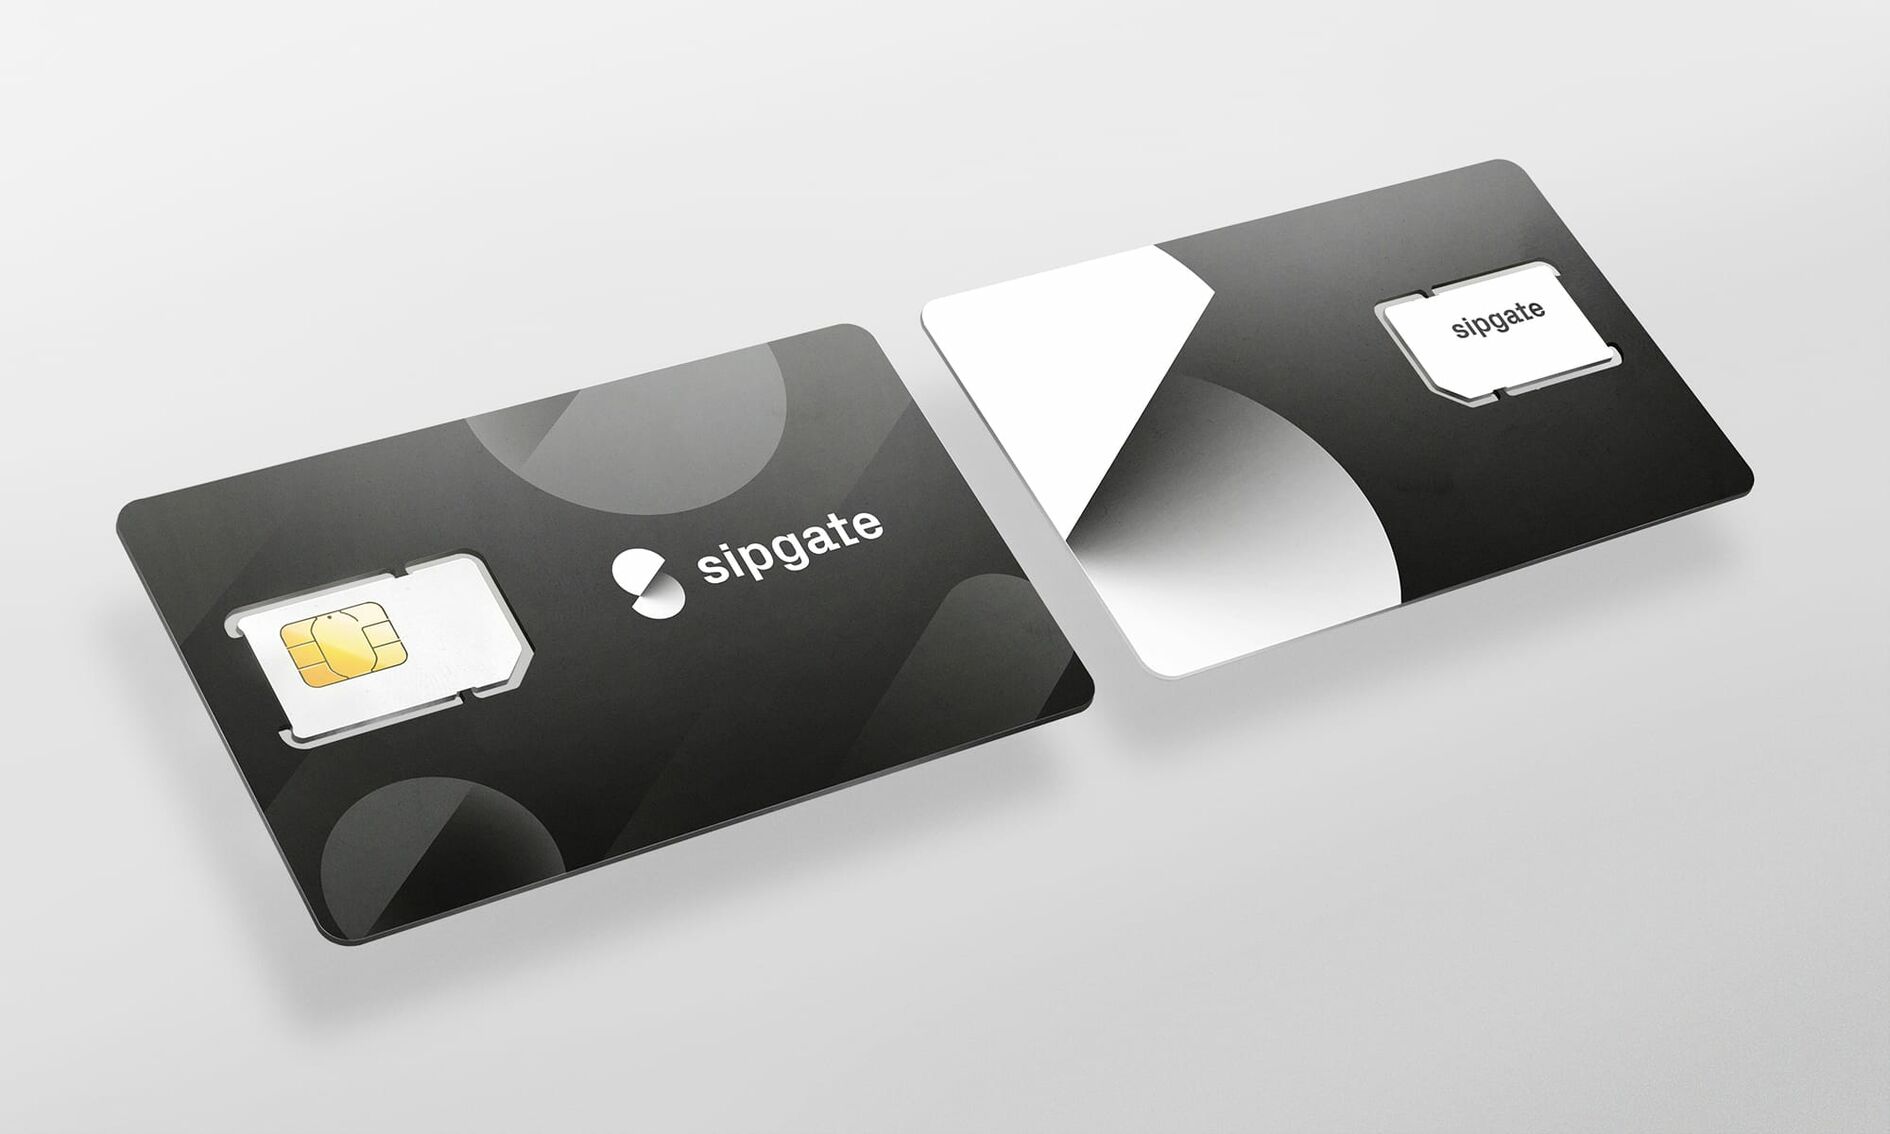 sipgate SIM-Karten